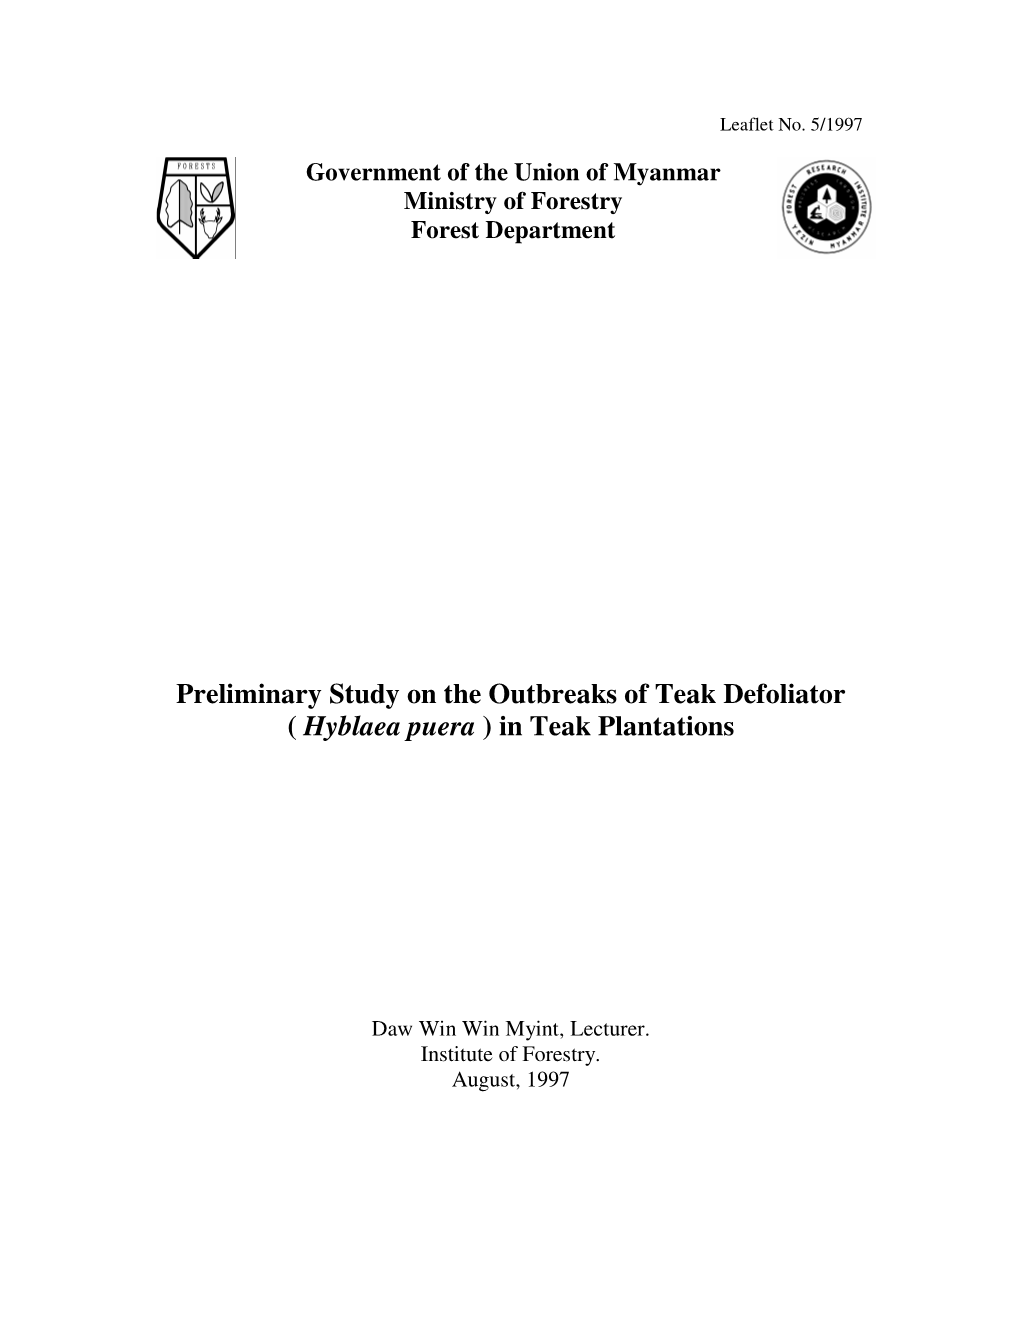 Preliminary Study on the Outbreaks of Teak Defoliator ( Hyblaea Puera ) in Teak Plantations